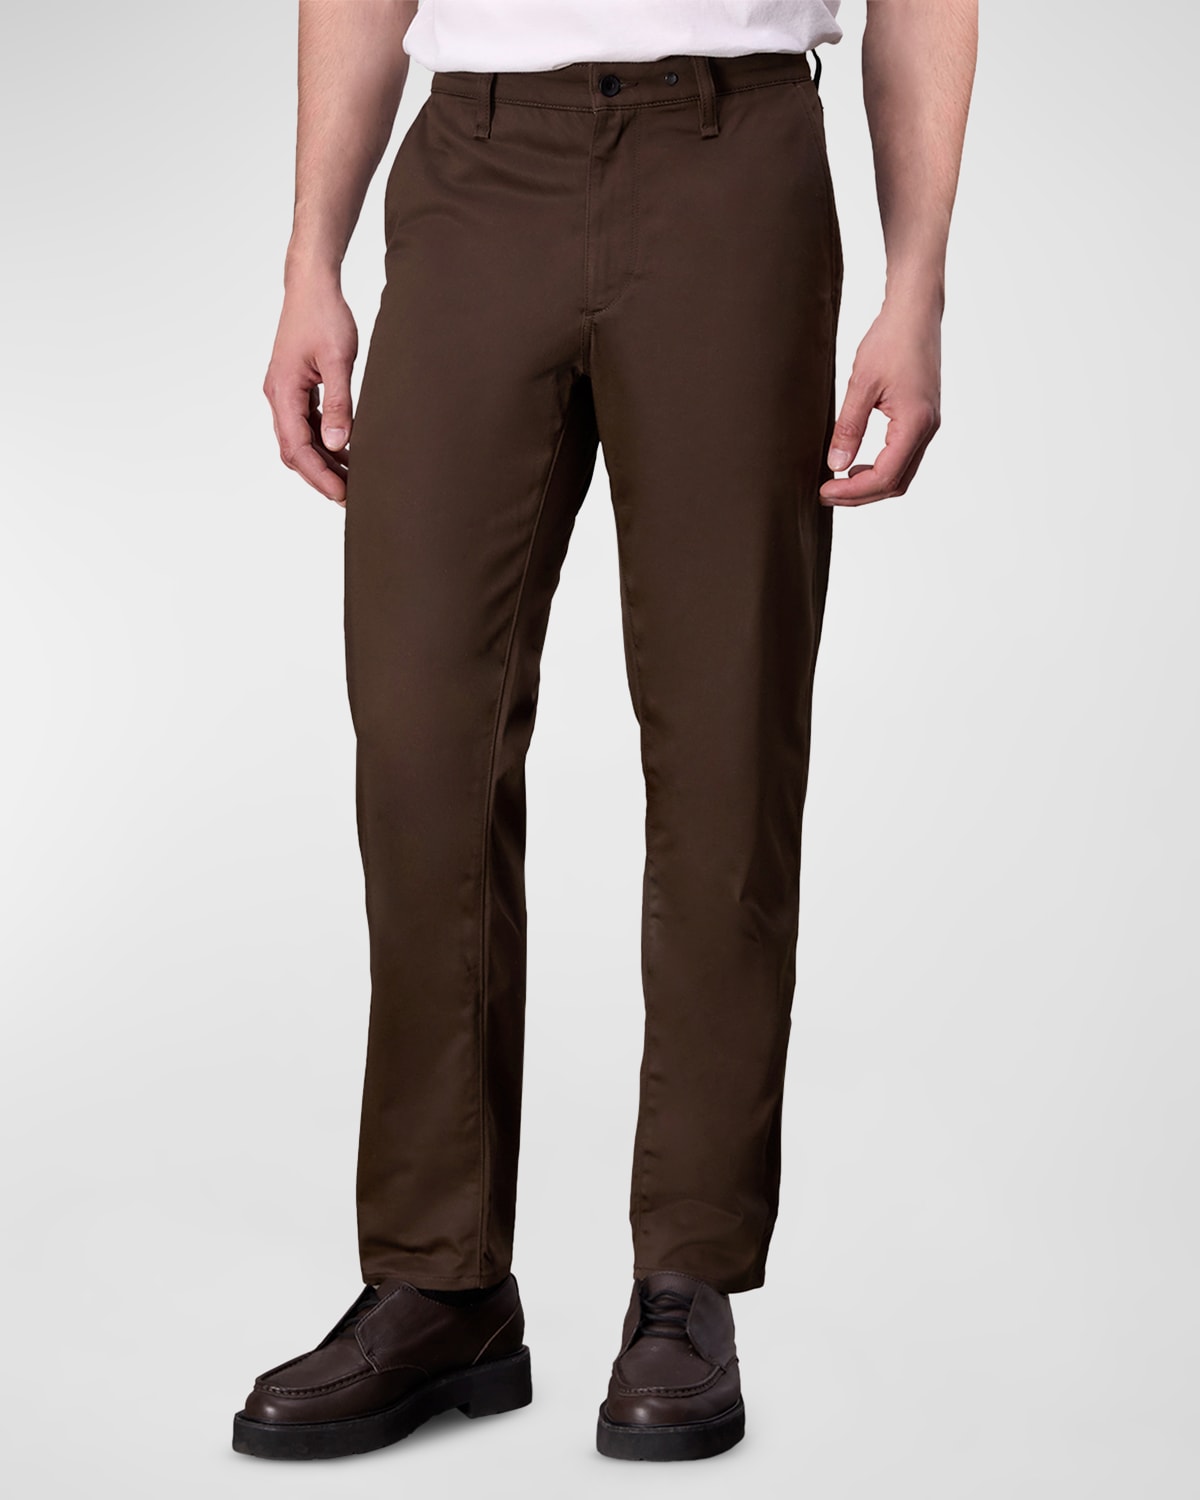 Men's Standard Chino Pants